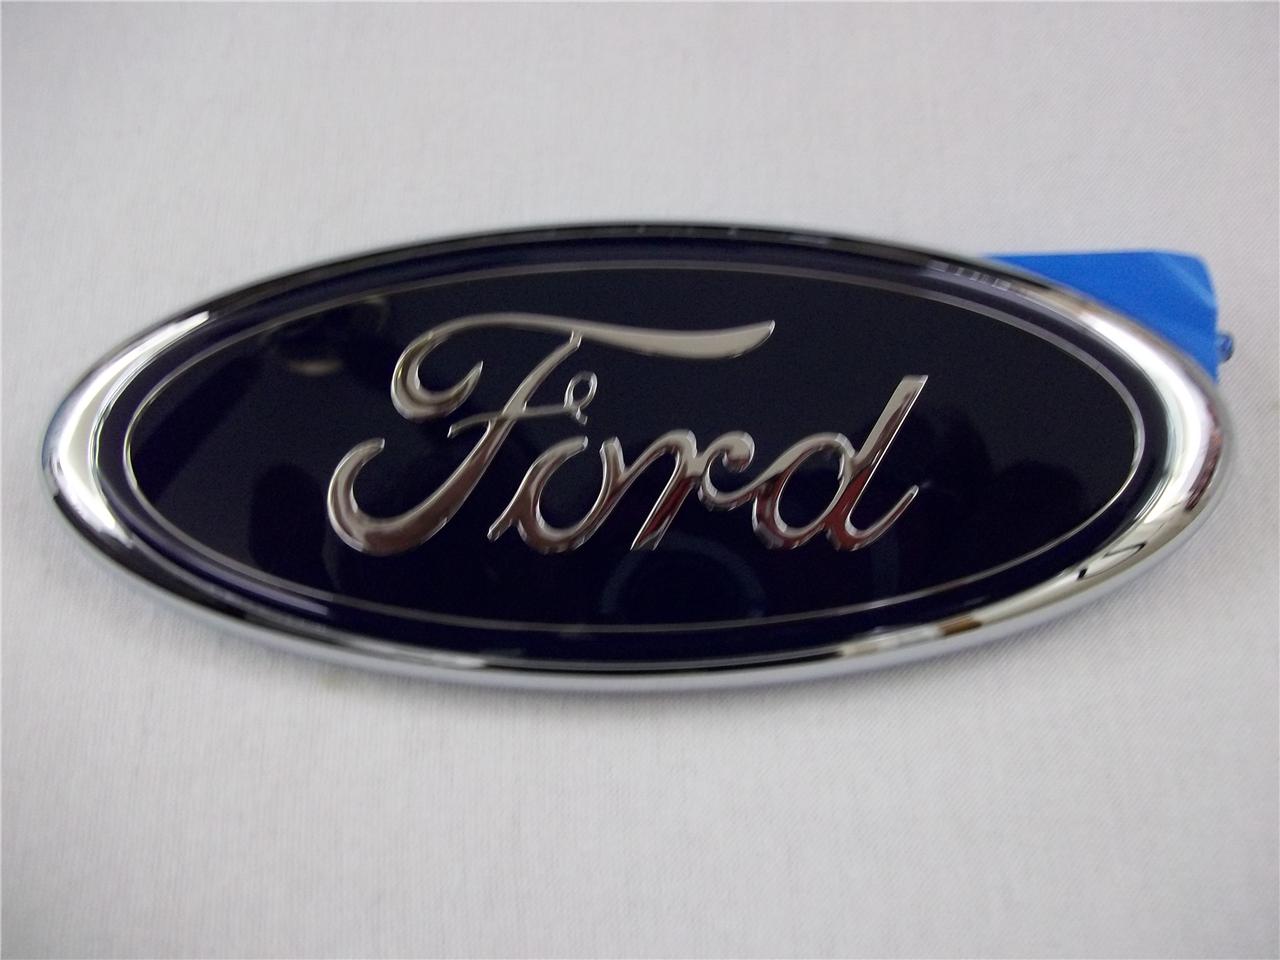 2008 Ford tailgate emblem #1